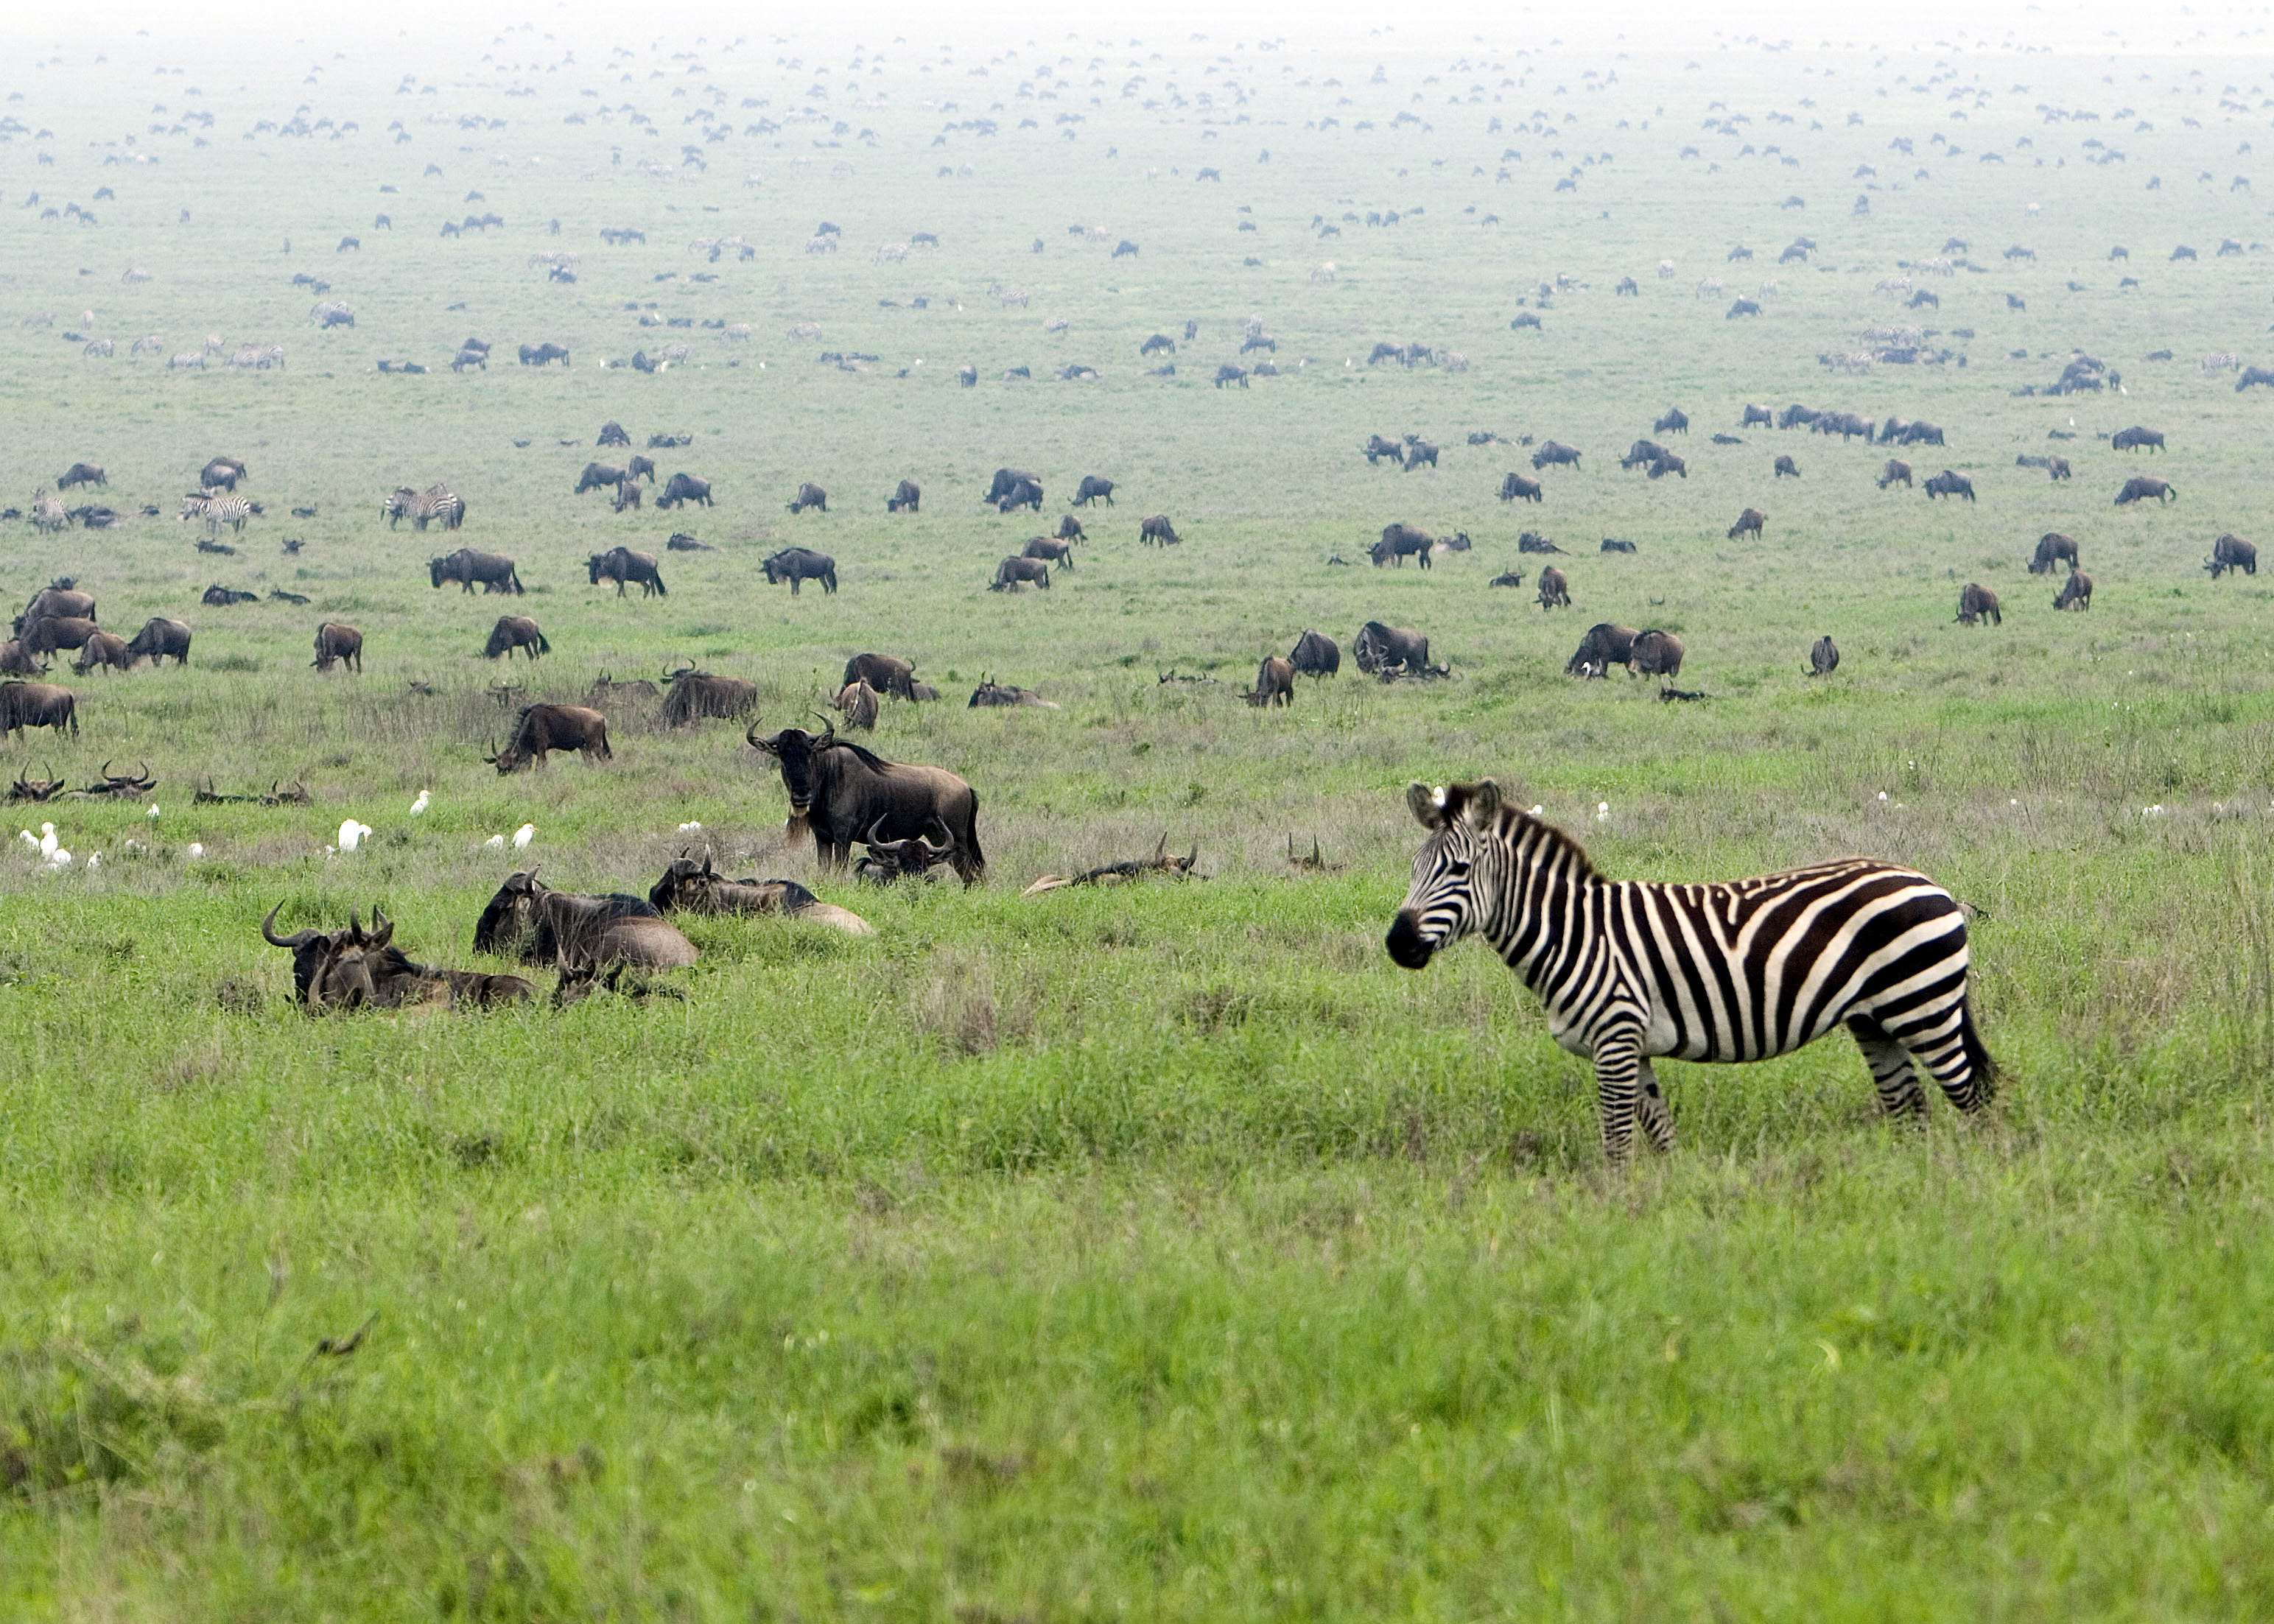 Zebras and wildebeest in the Serengeti in Tanzania